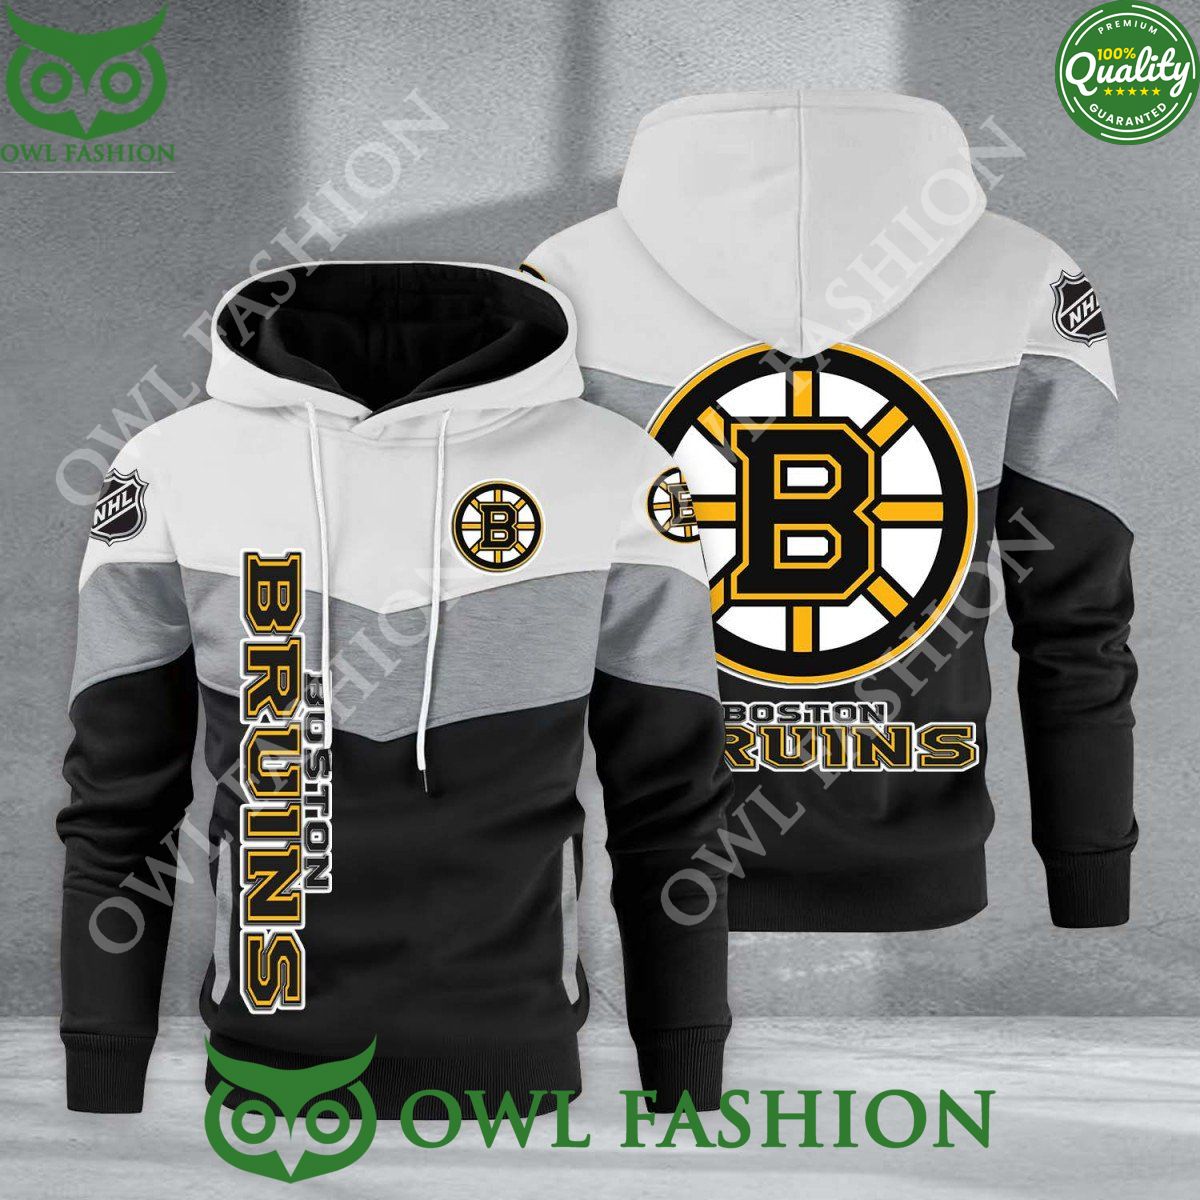 boston bruins nhl hockey black white printed hoodie 1 VqKHU.jpg